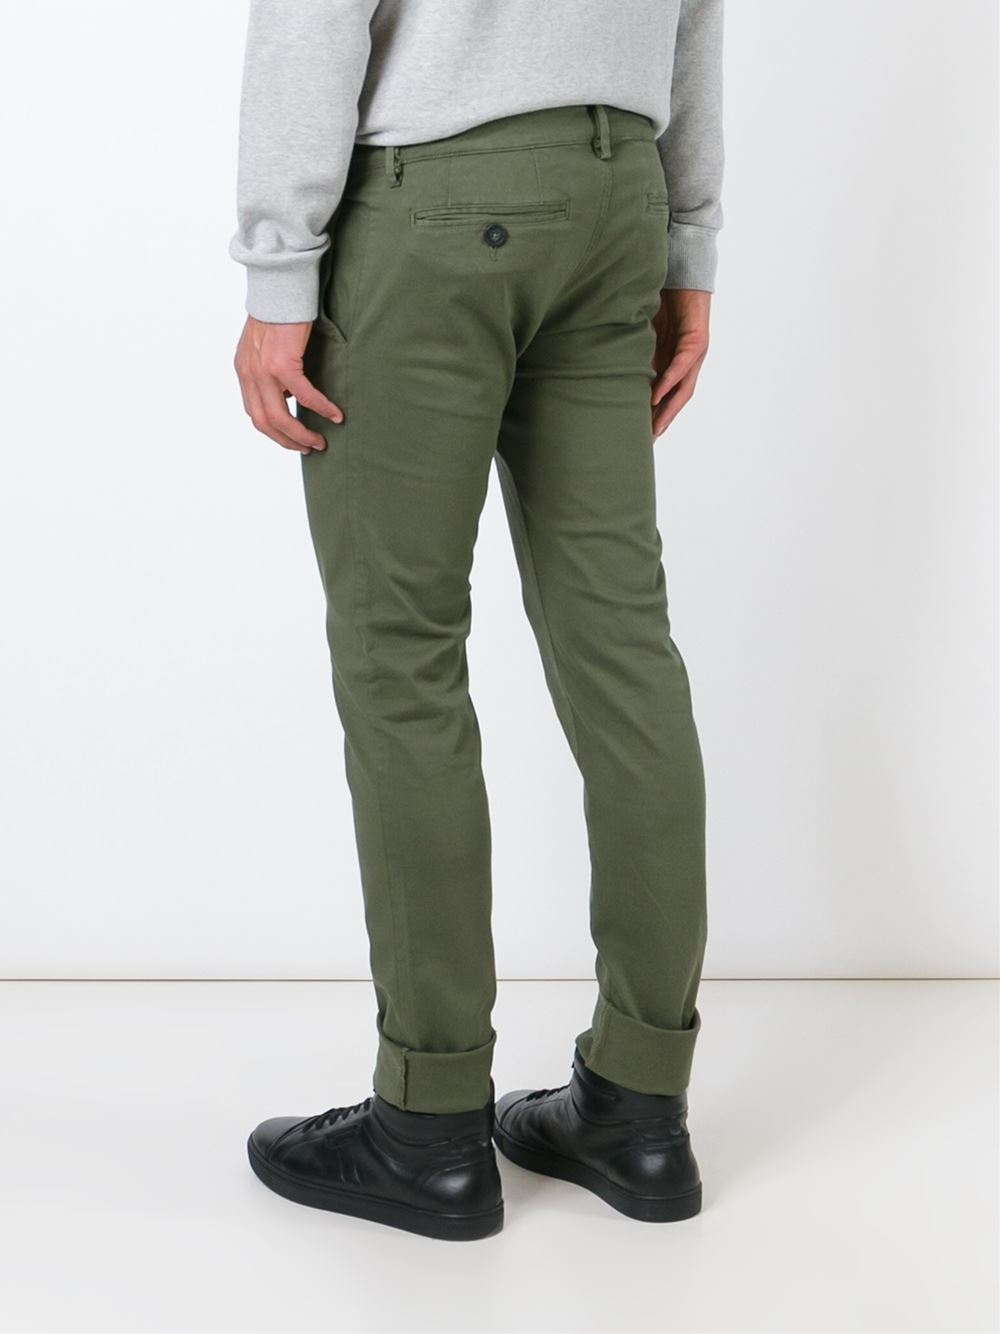 Lyst - Diesel Slim Chino Trousers in Green for Men